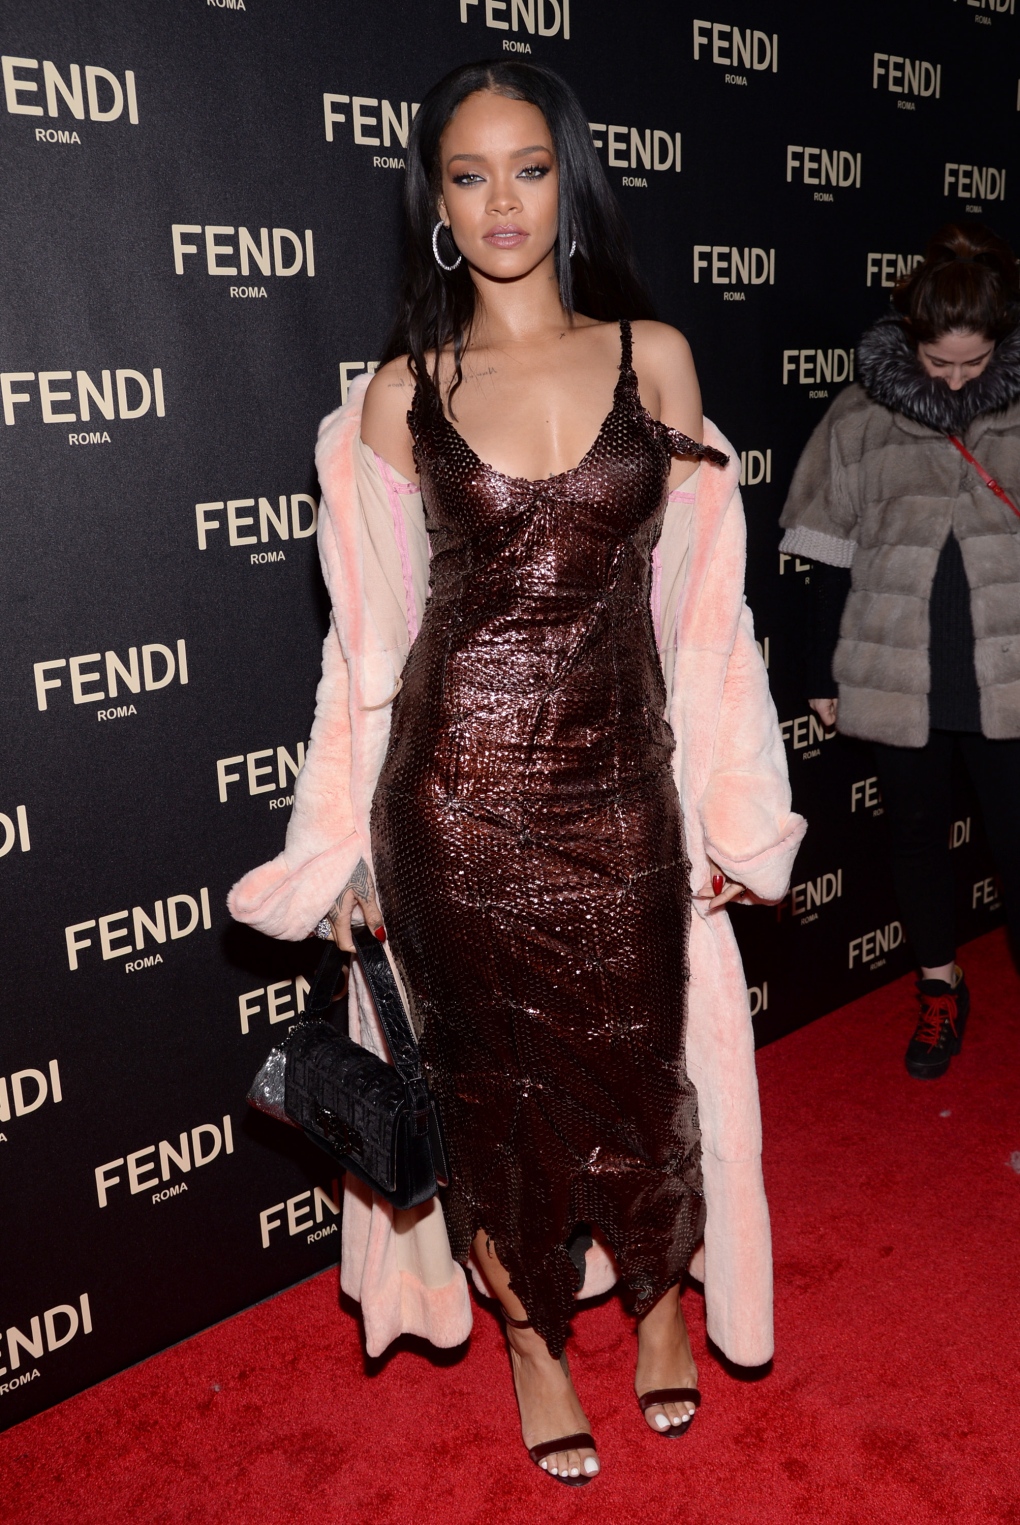 NY Fashion Week: Monique Lhuillier gets Rihanna's Fendi design | CTV News